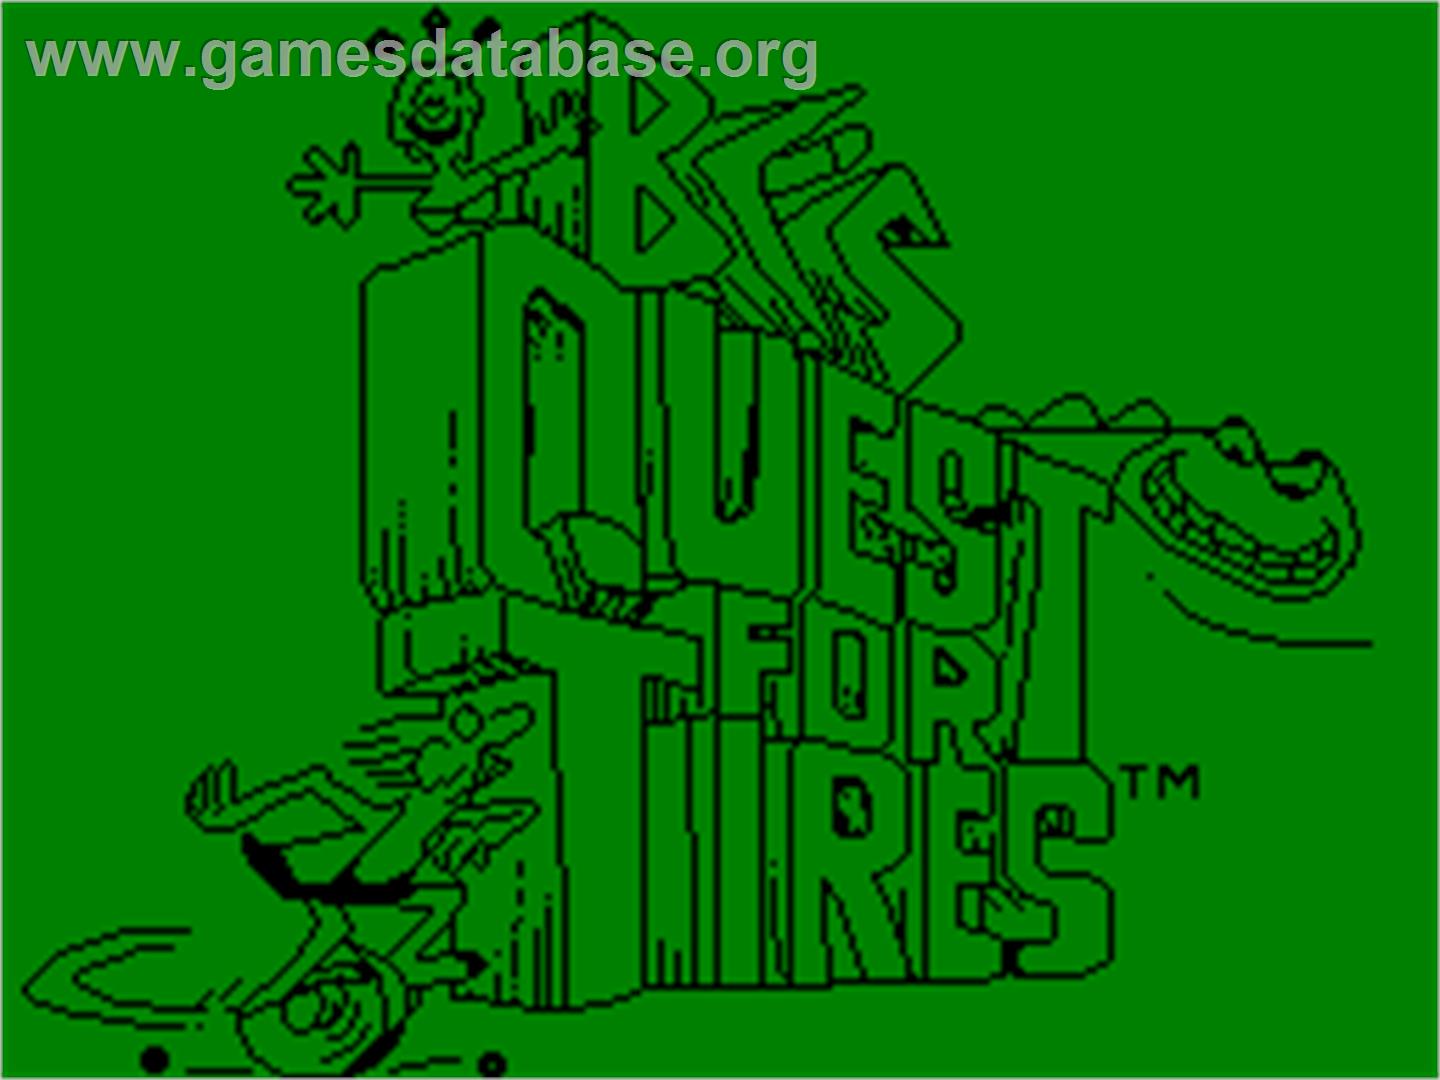 BC's Quest for Tires - Sinclair ZX Spectrum - Artwork - Title Screen